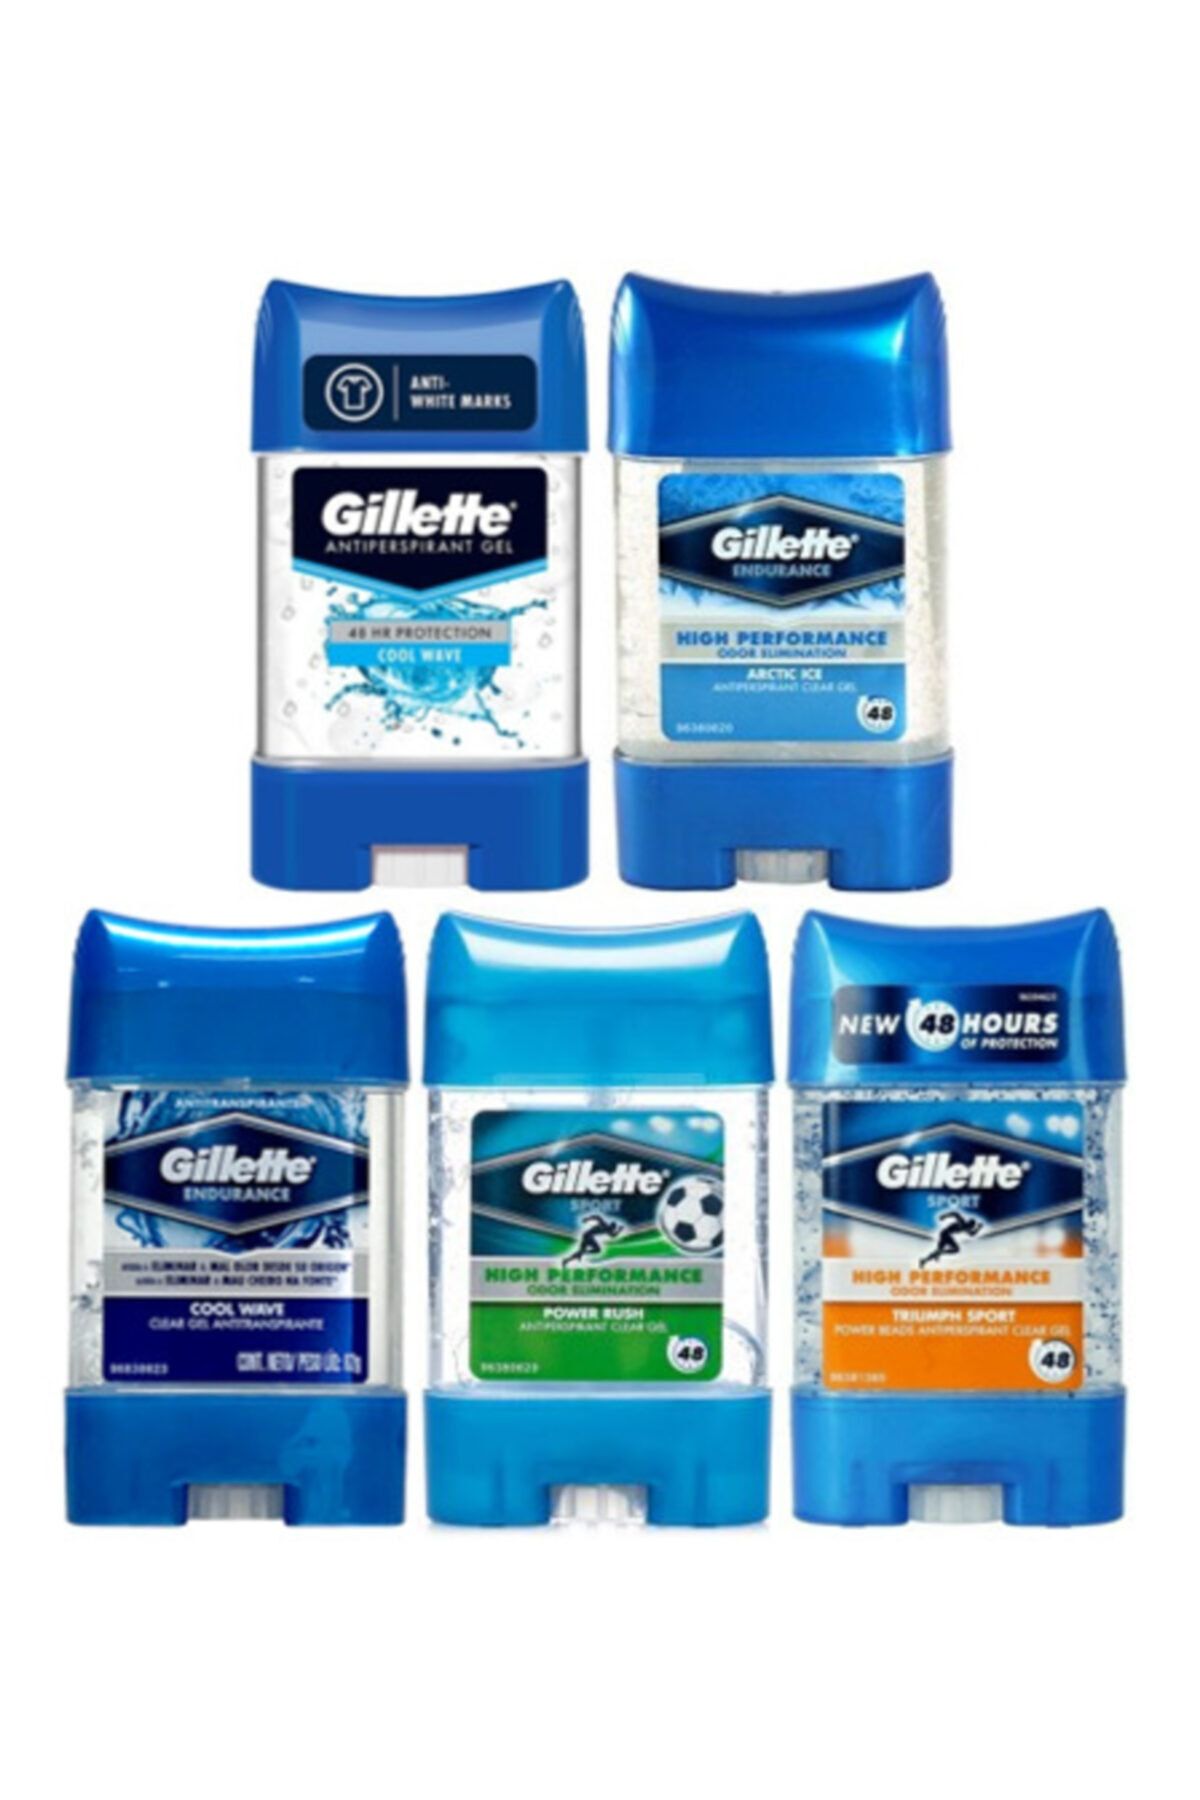 Gillette Antiperspirant Koltuk Altı Jel 70 Gr X 5 - Cool Wave+sport+power+article+cool Anti White